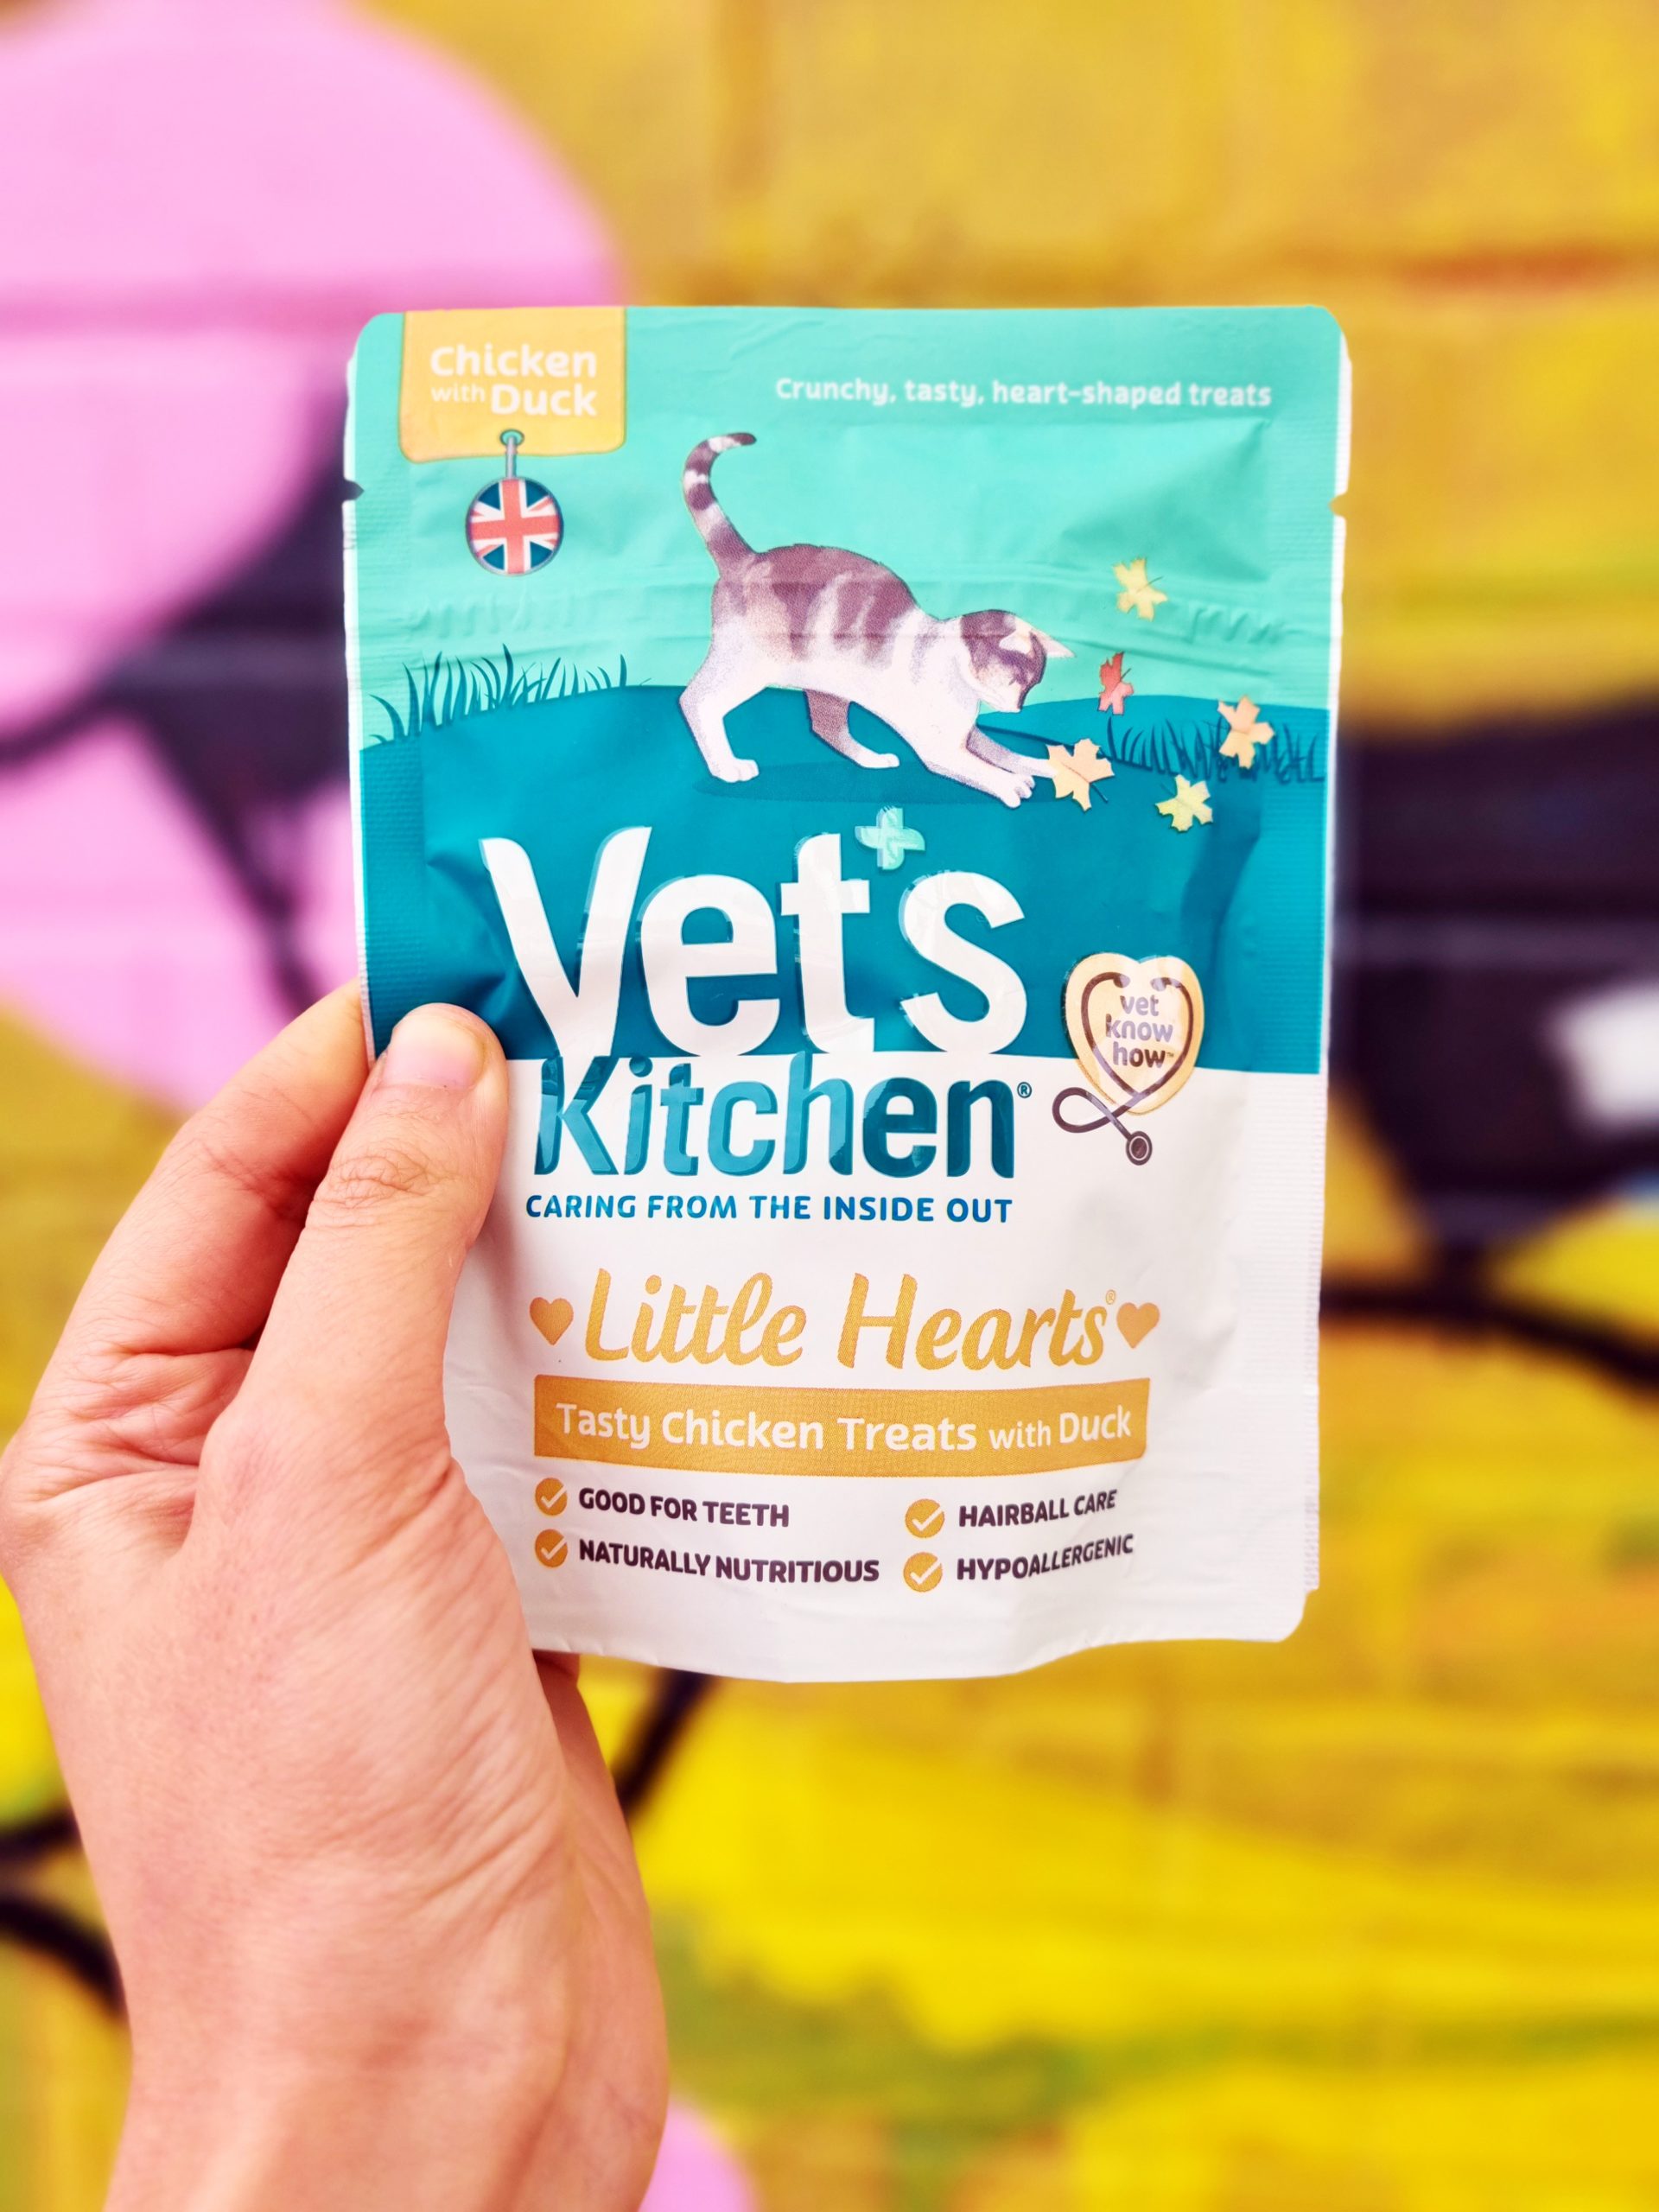 <img src="vets.jpg" alt="vets kitchen colourful cat gift ideas"/> 